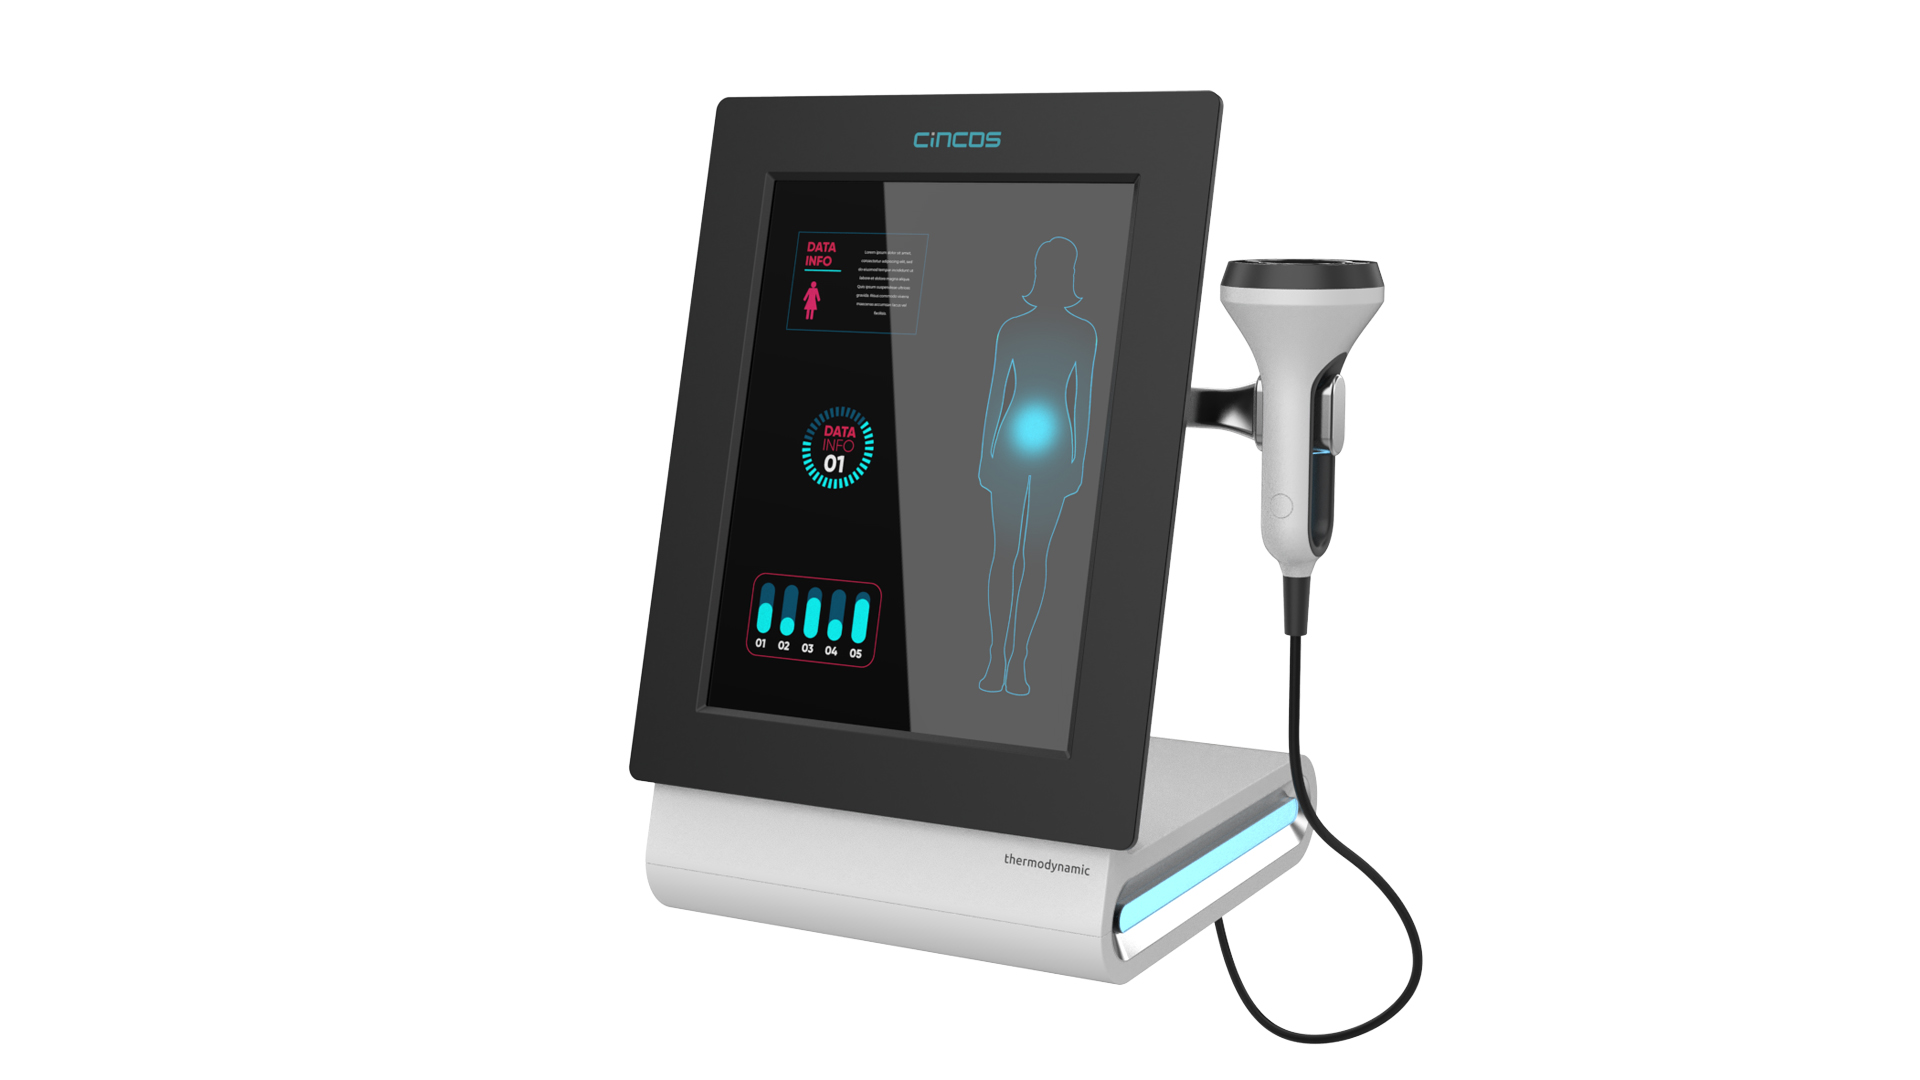 Cincos - Thermodynamic Medical Device